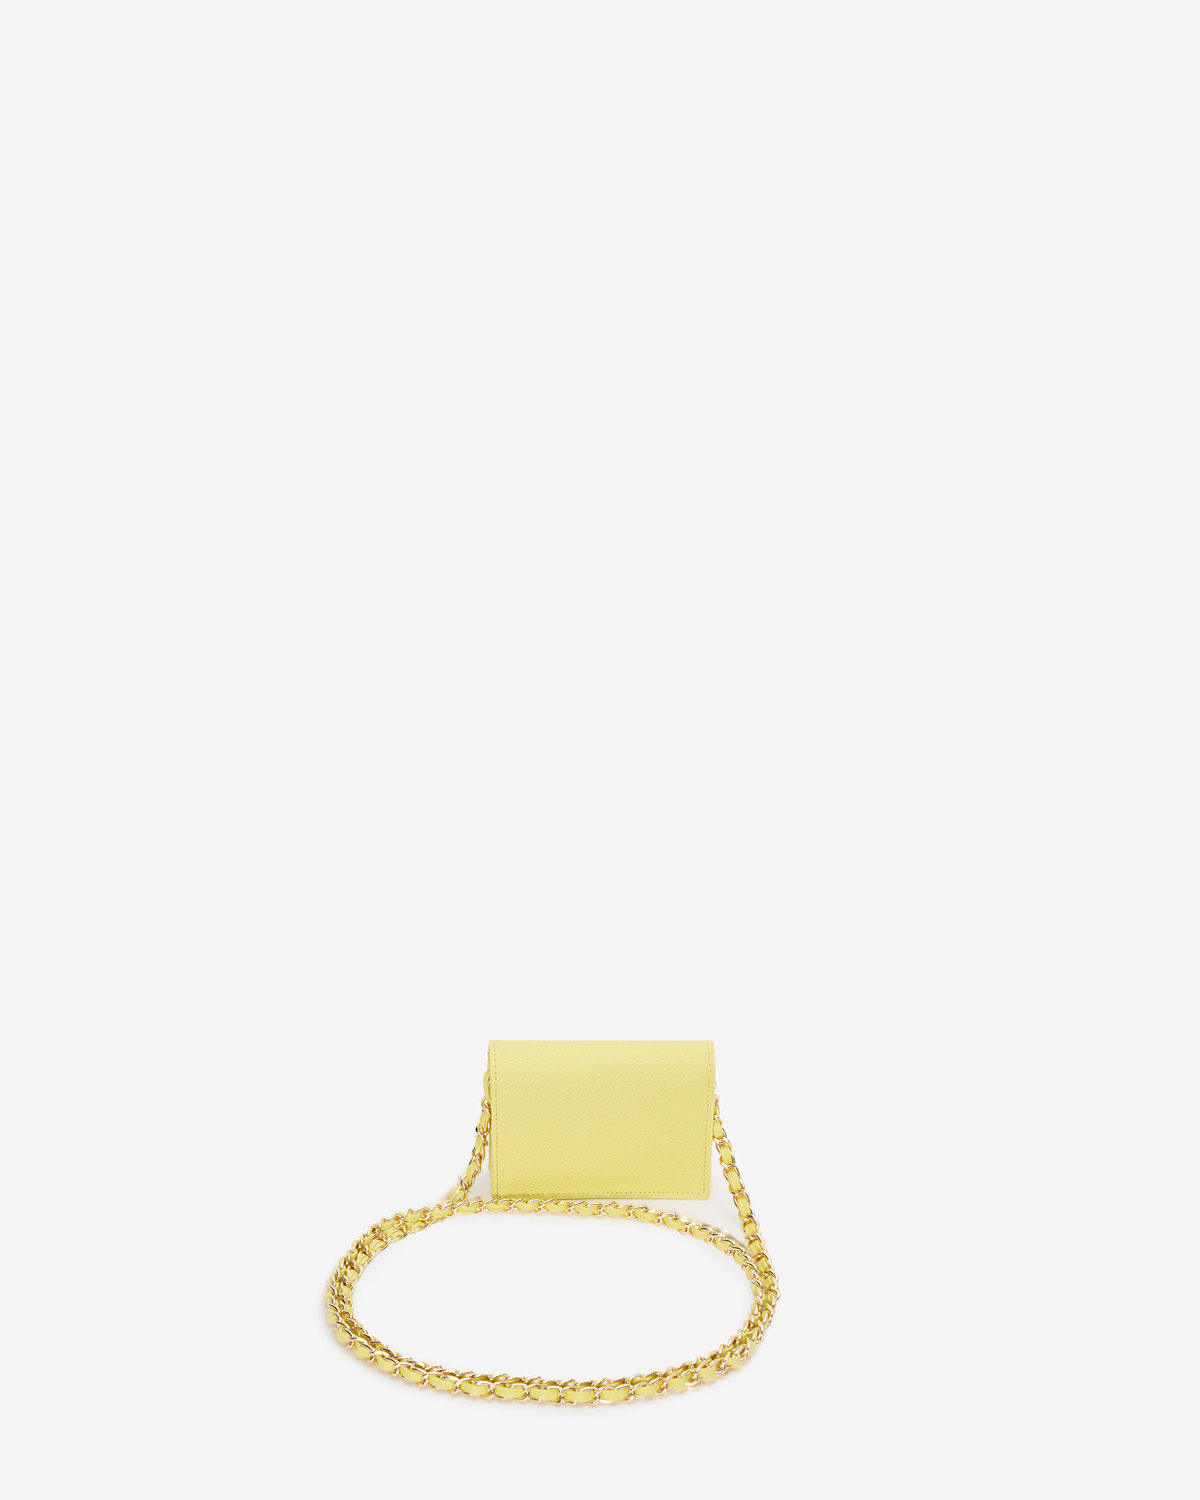 VERA Emily Flap Wallet with Leather Braided Gold Chain in Happy Yellow กระเป๋าสตางค์หนังแท้ แบบเปิดฝา พร้อมสายโซ่สีทองร้อยหนัง สีเหลือง